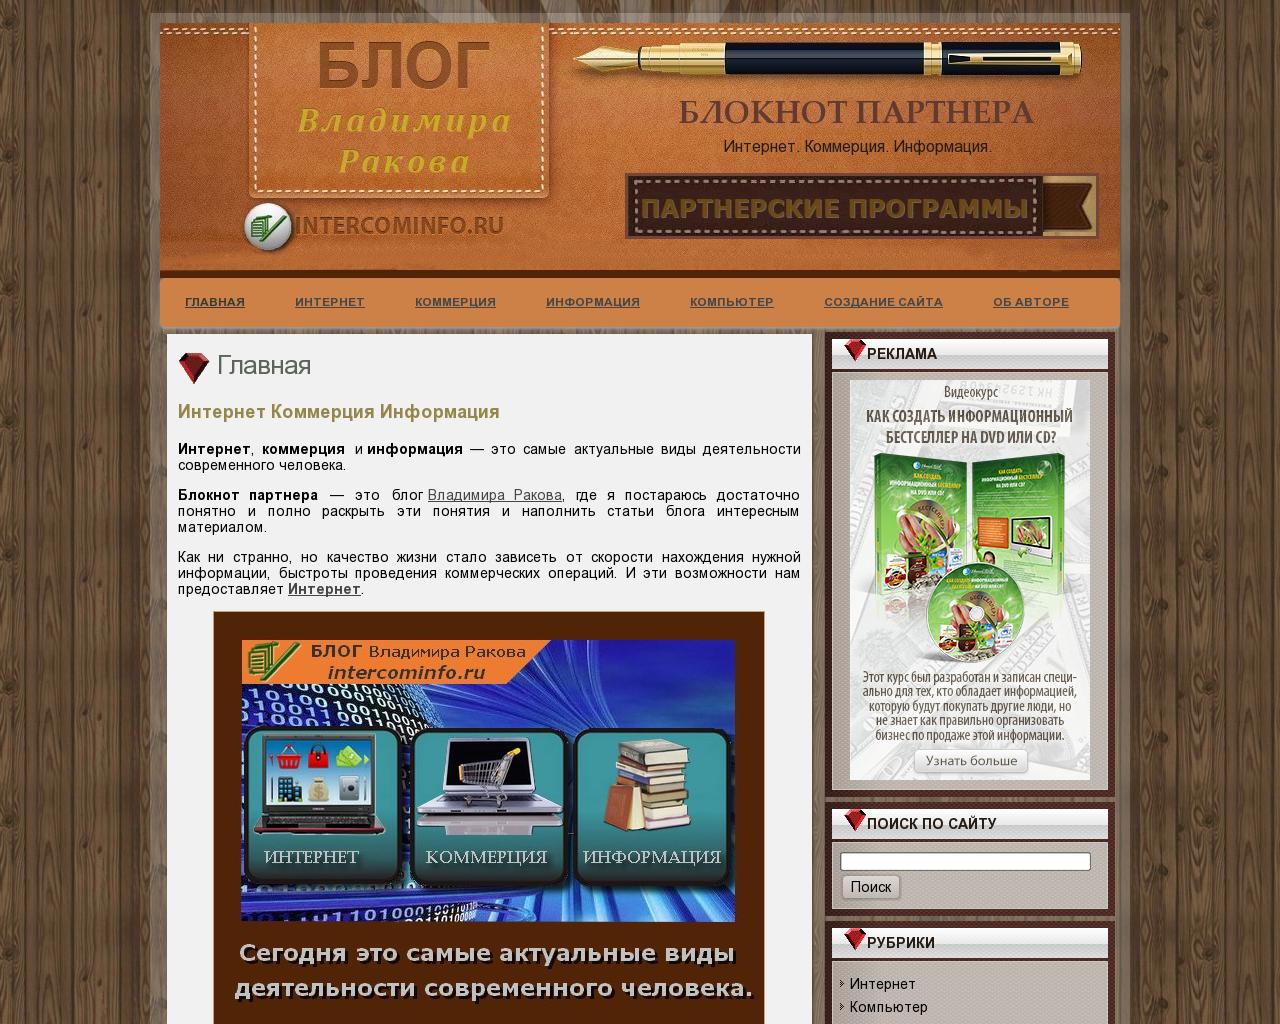 Изображение сайта intercominfo.ru в разрешении 1280x1024